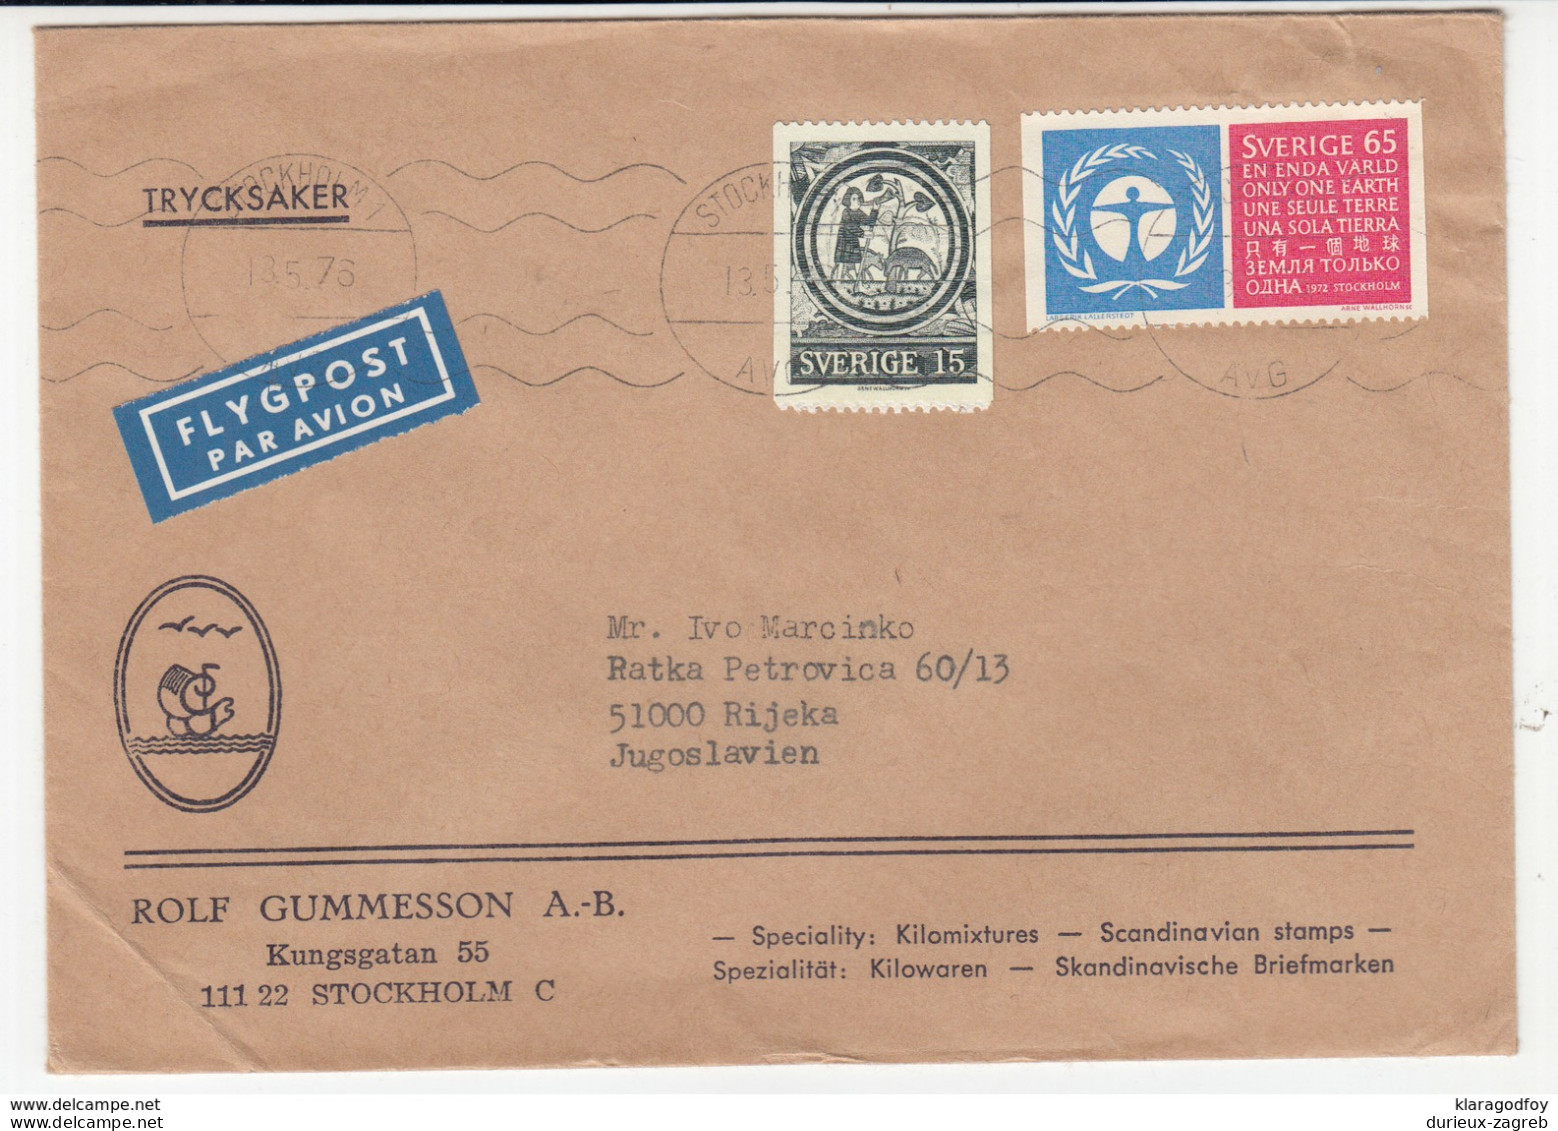 Sweden, Rolf Gummesson Company Letter Cover Airmail Travelled 1976 Stockholm Pmk B180220 - Storia Postale